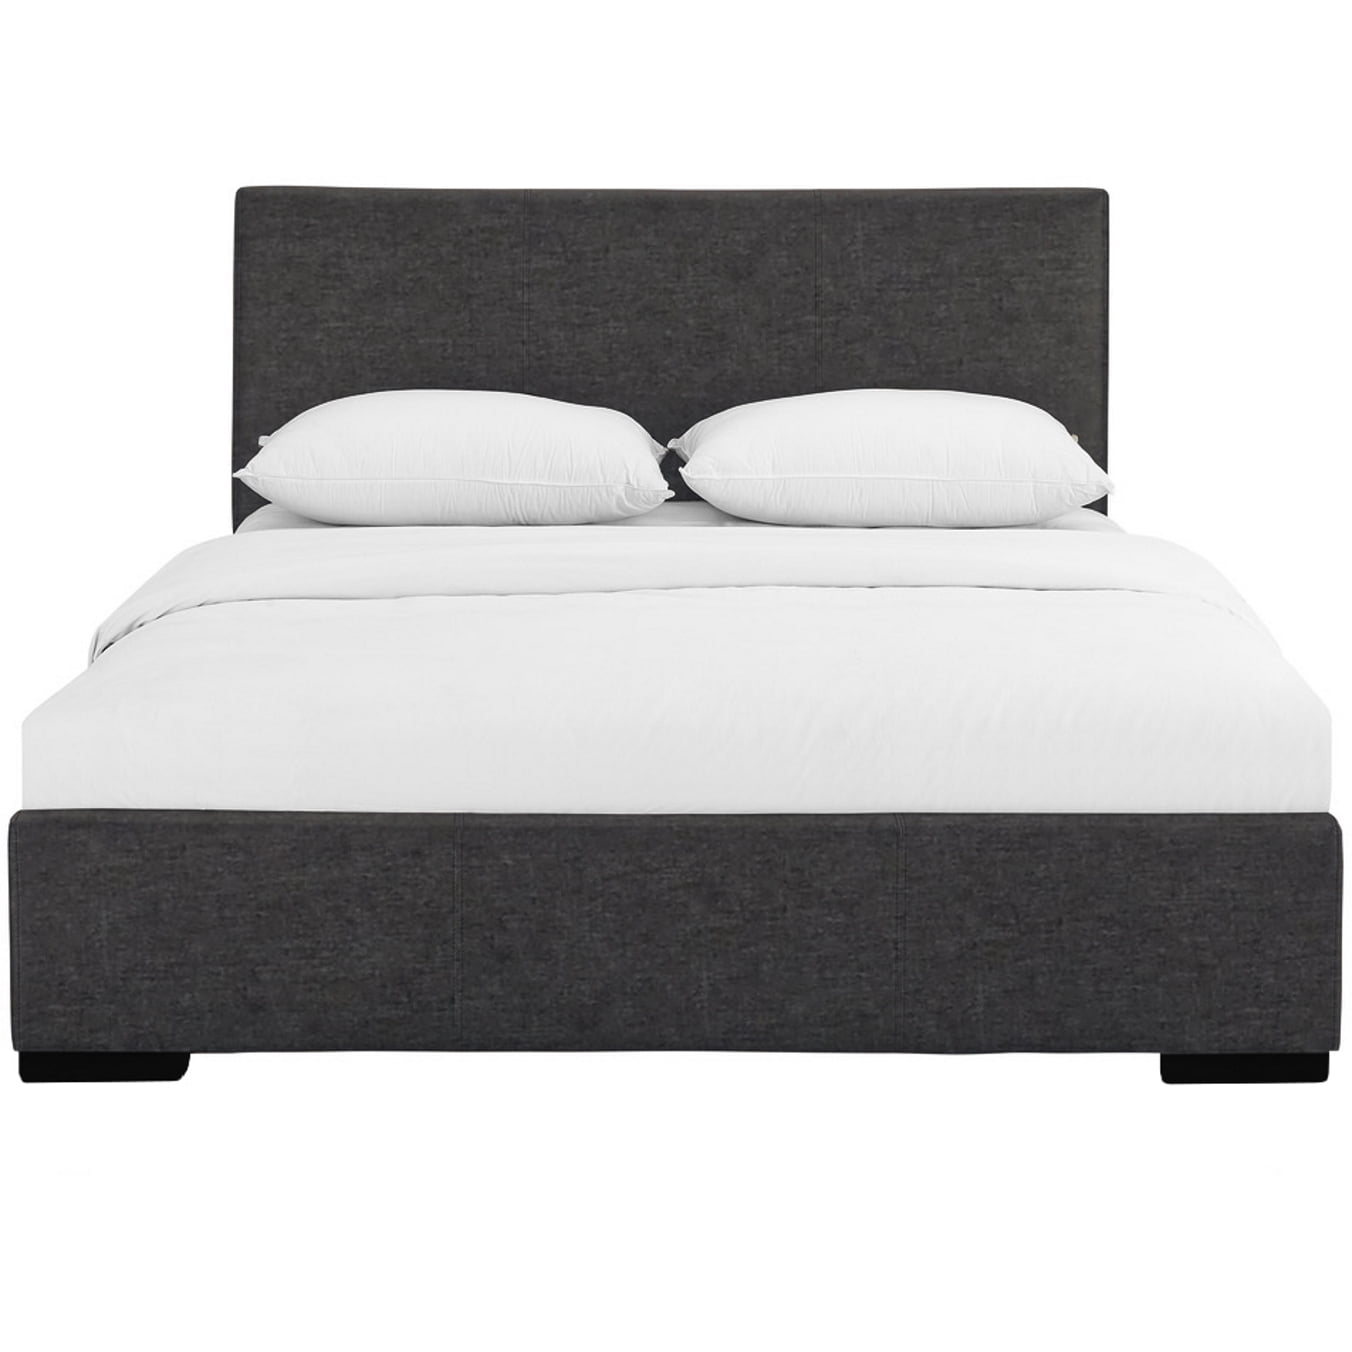 86343 In. Indes Upholstered Platform Bed, Grey, King Size - 85.4 X 79 X 34.8 In.